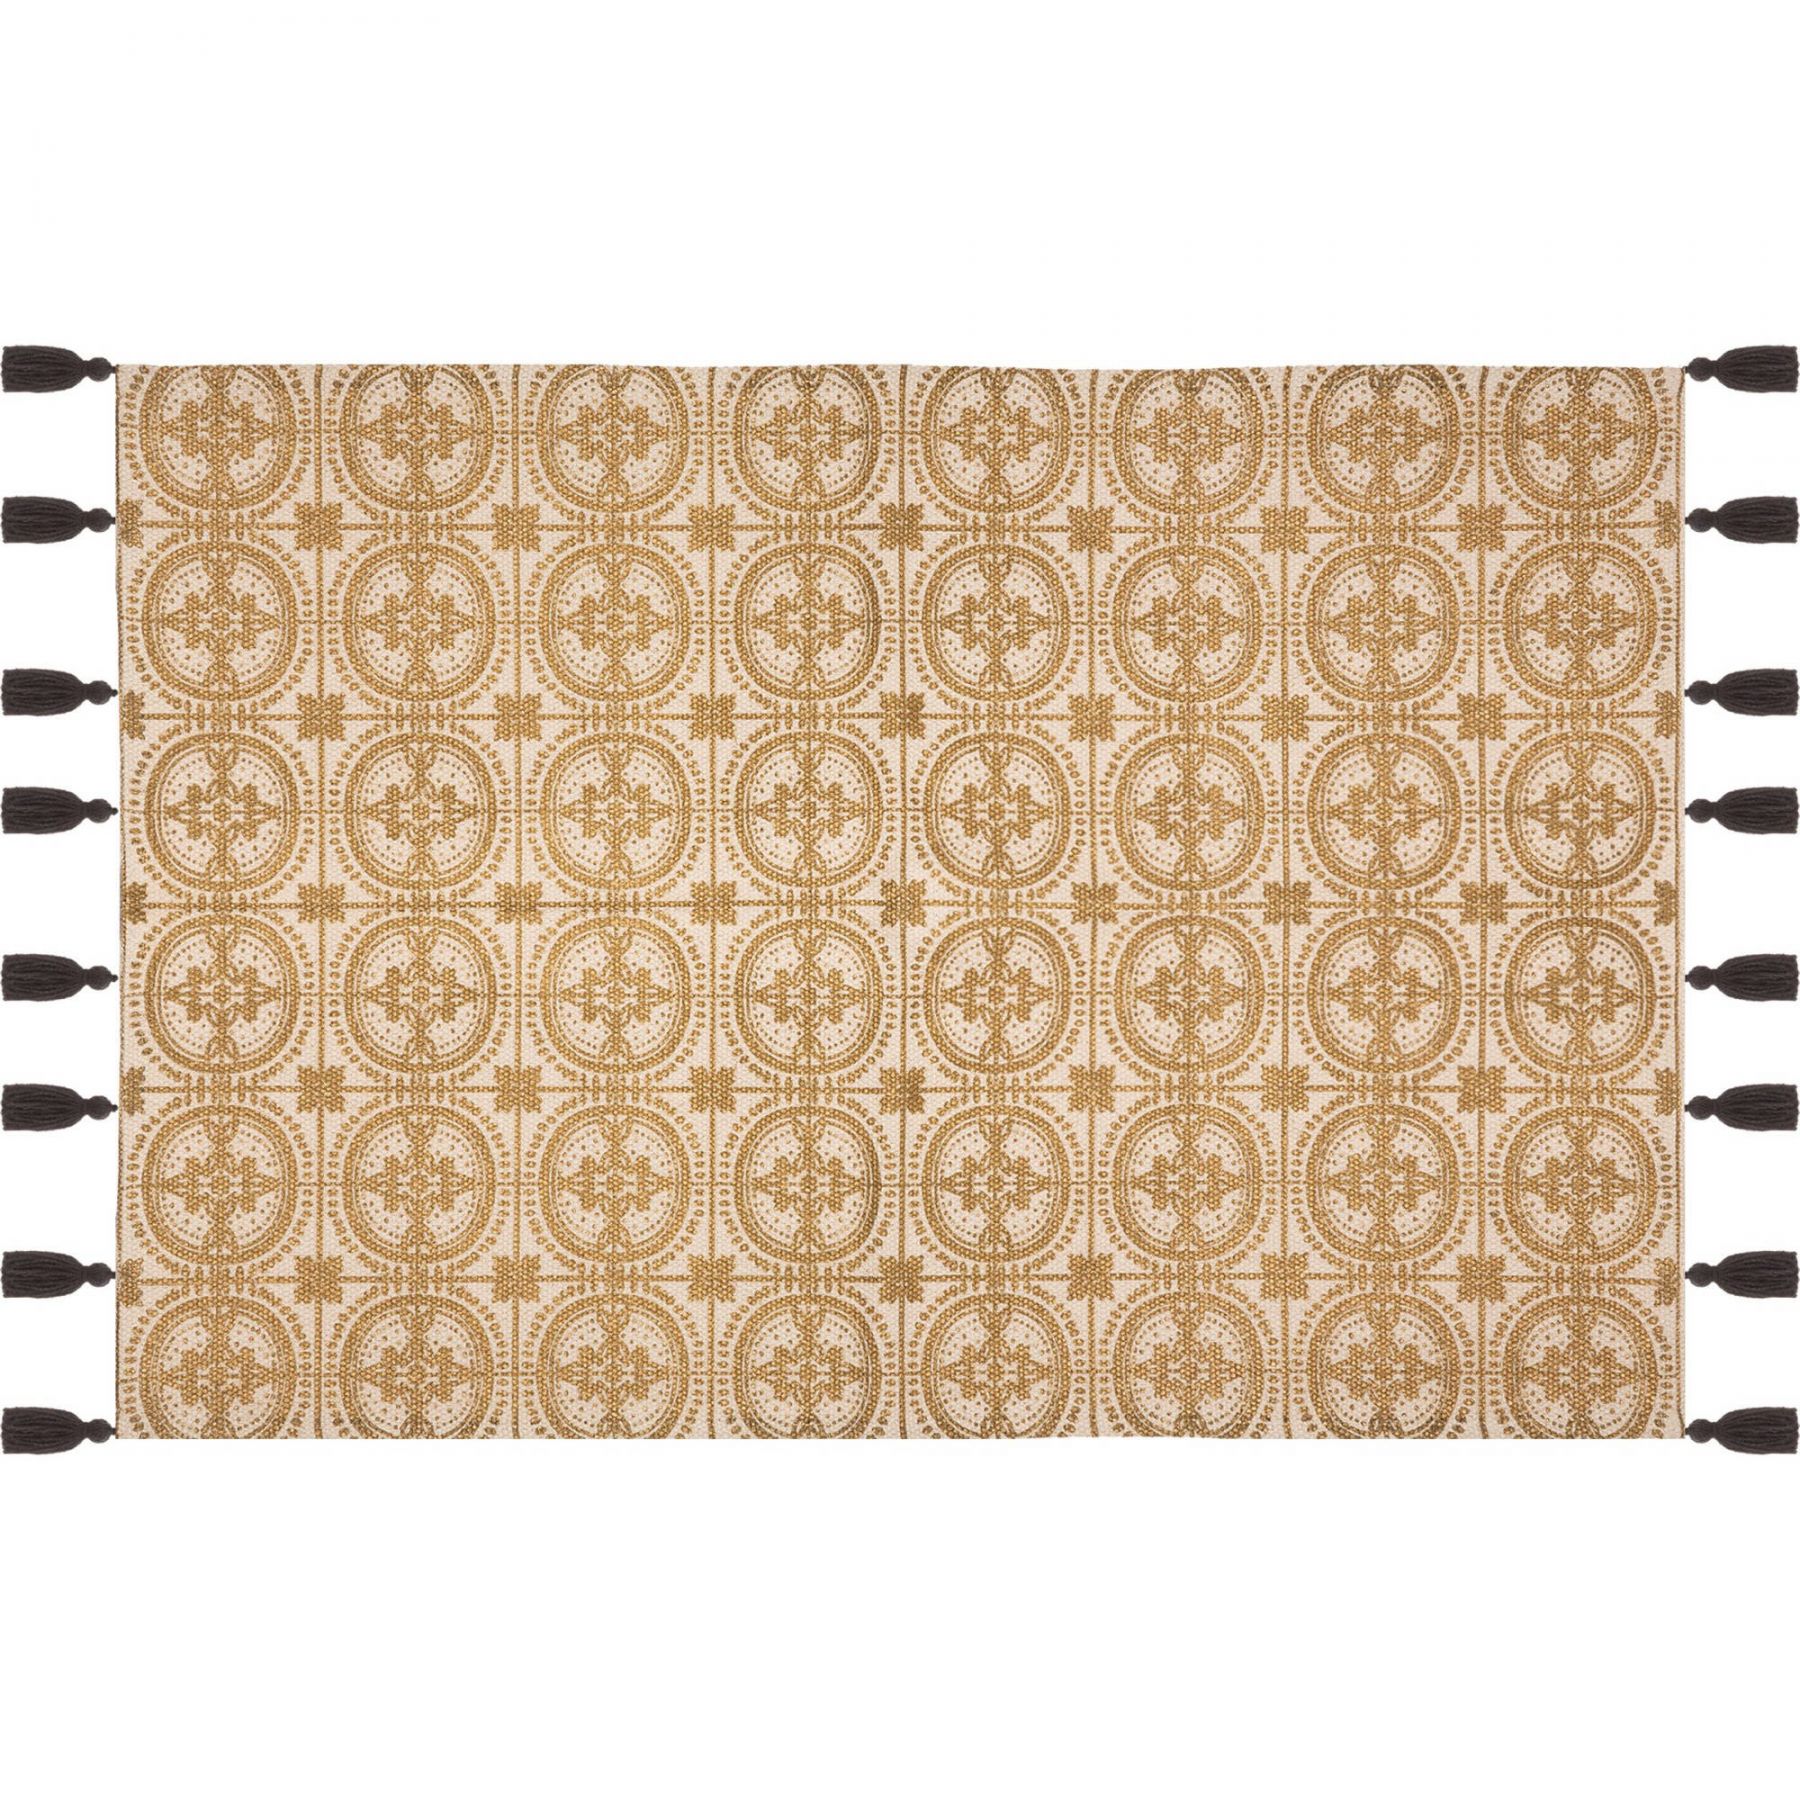 Atmosphera Obývací pokoj koberec, 90 x 60 cm, se zlatou mozaikou - EMAKO.CZ s.r.o.